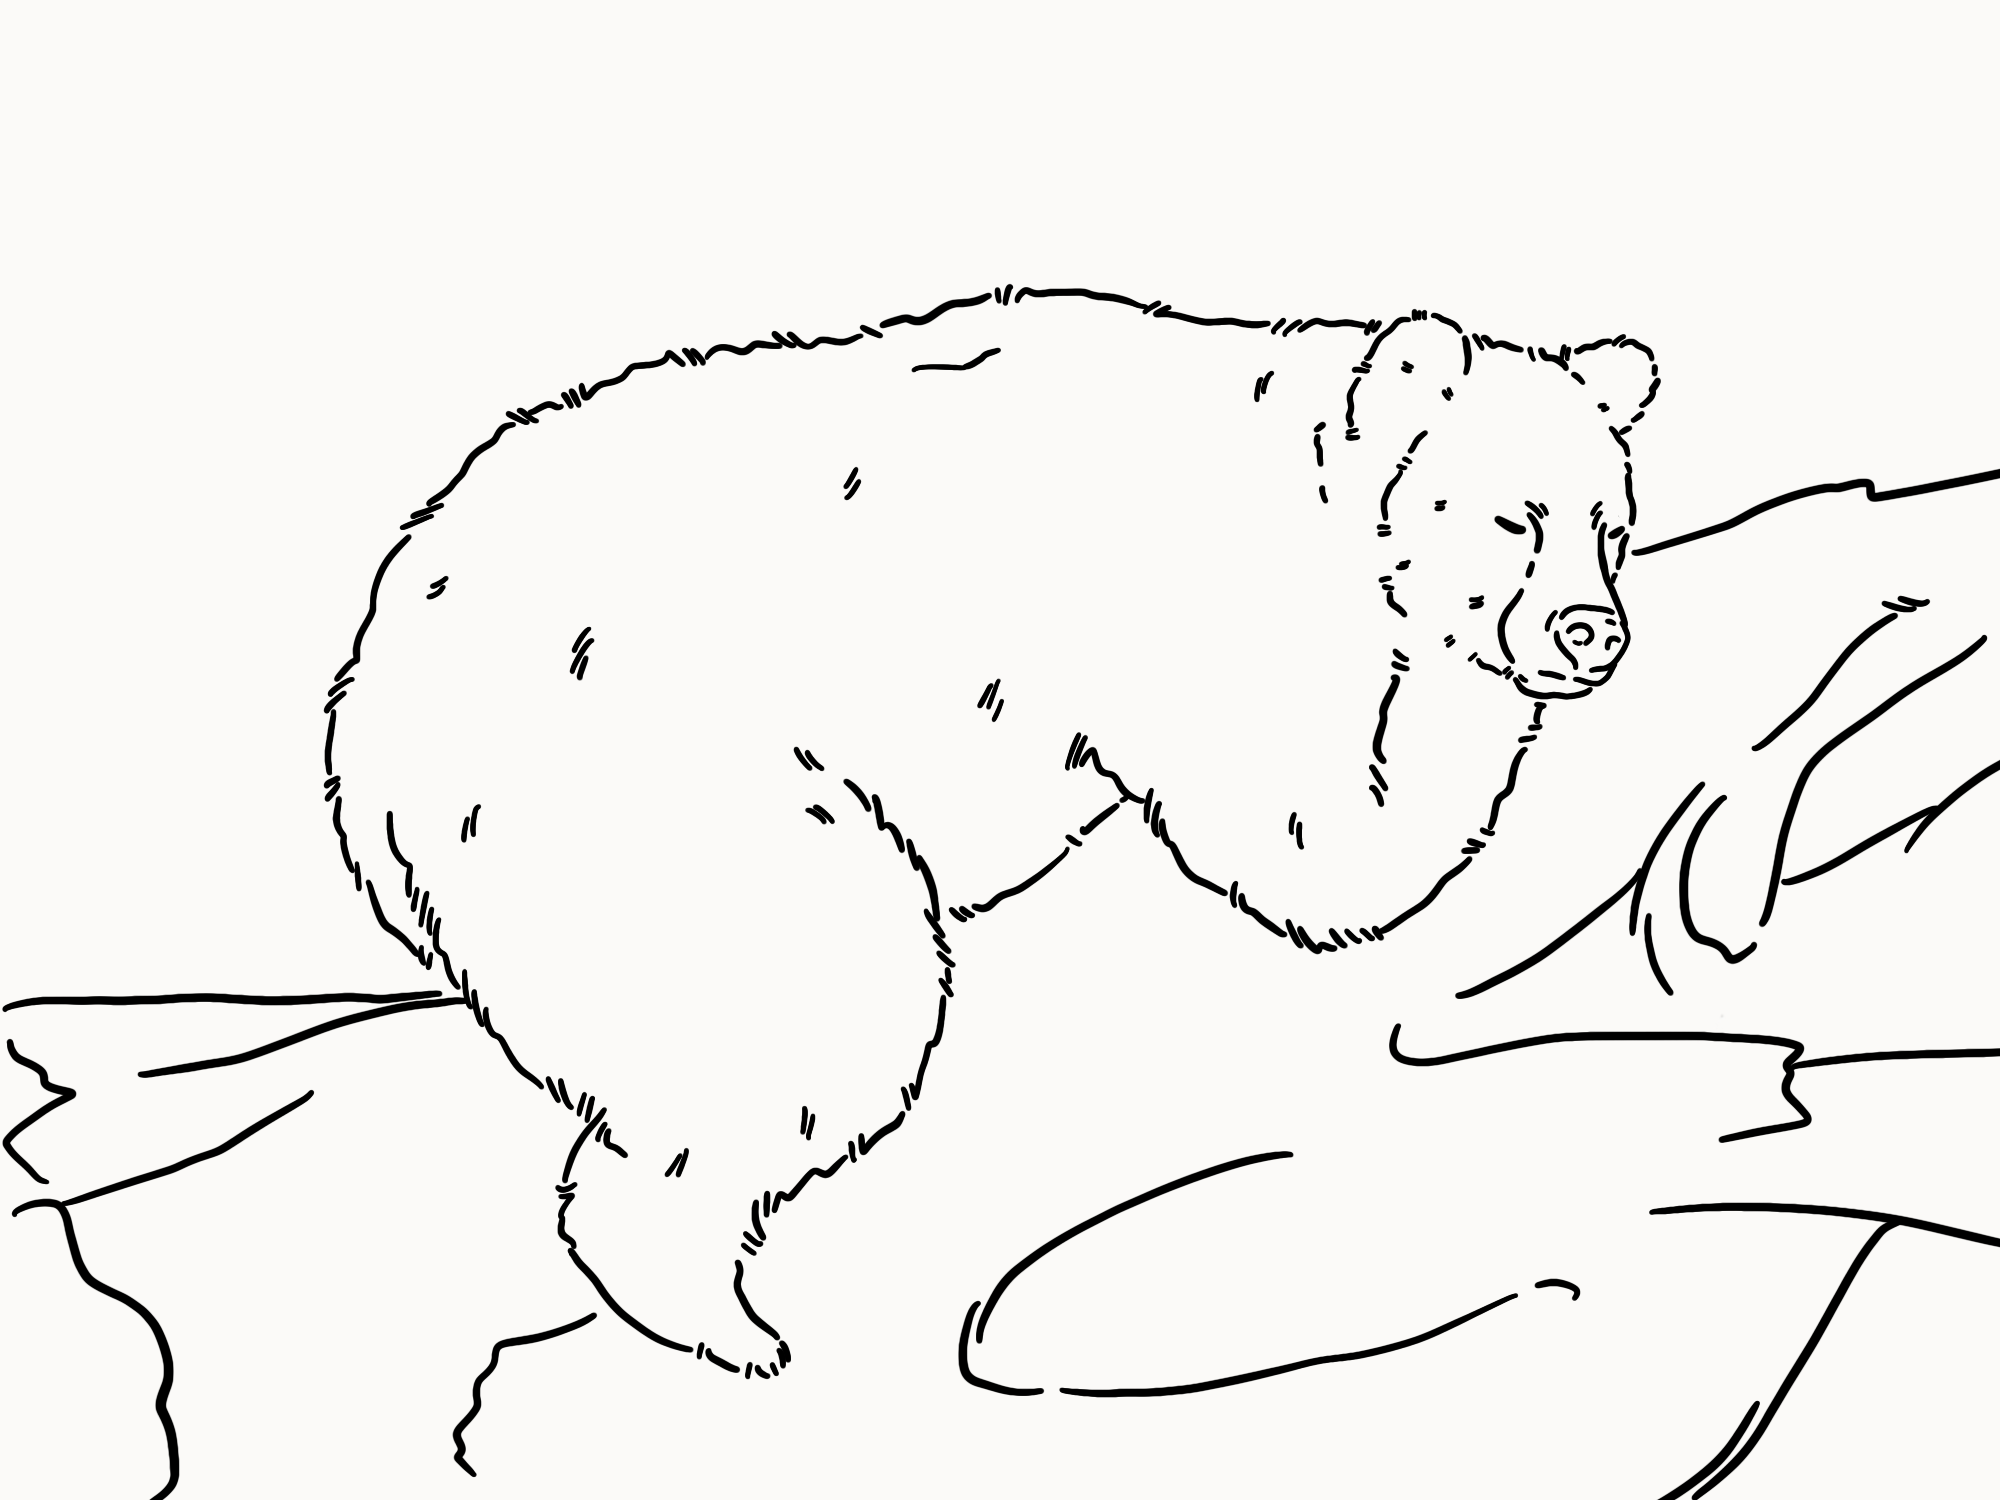 hibernating bear illustration